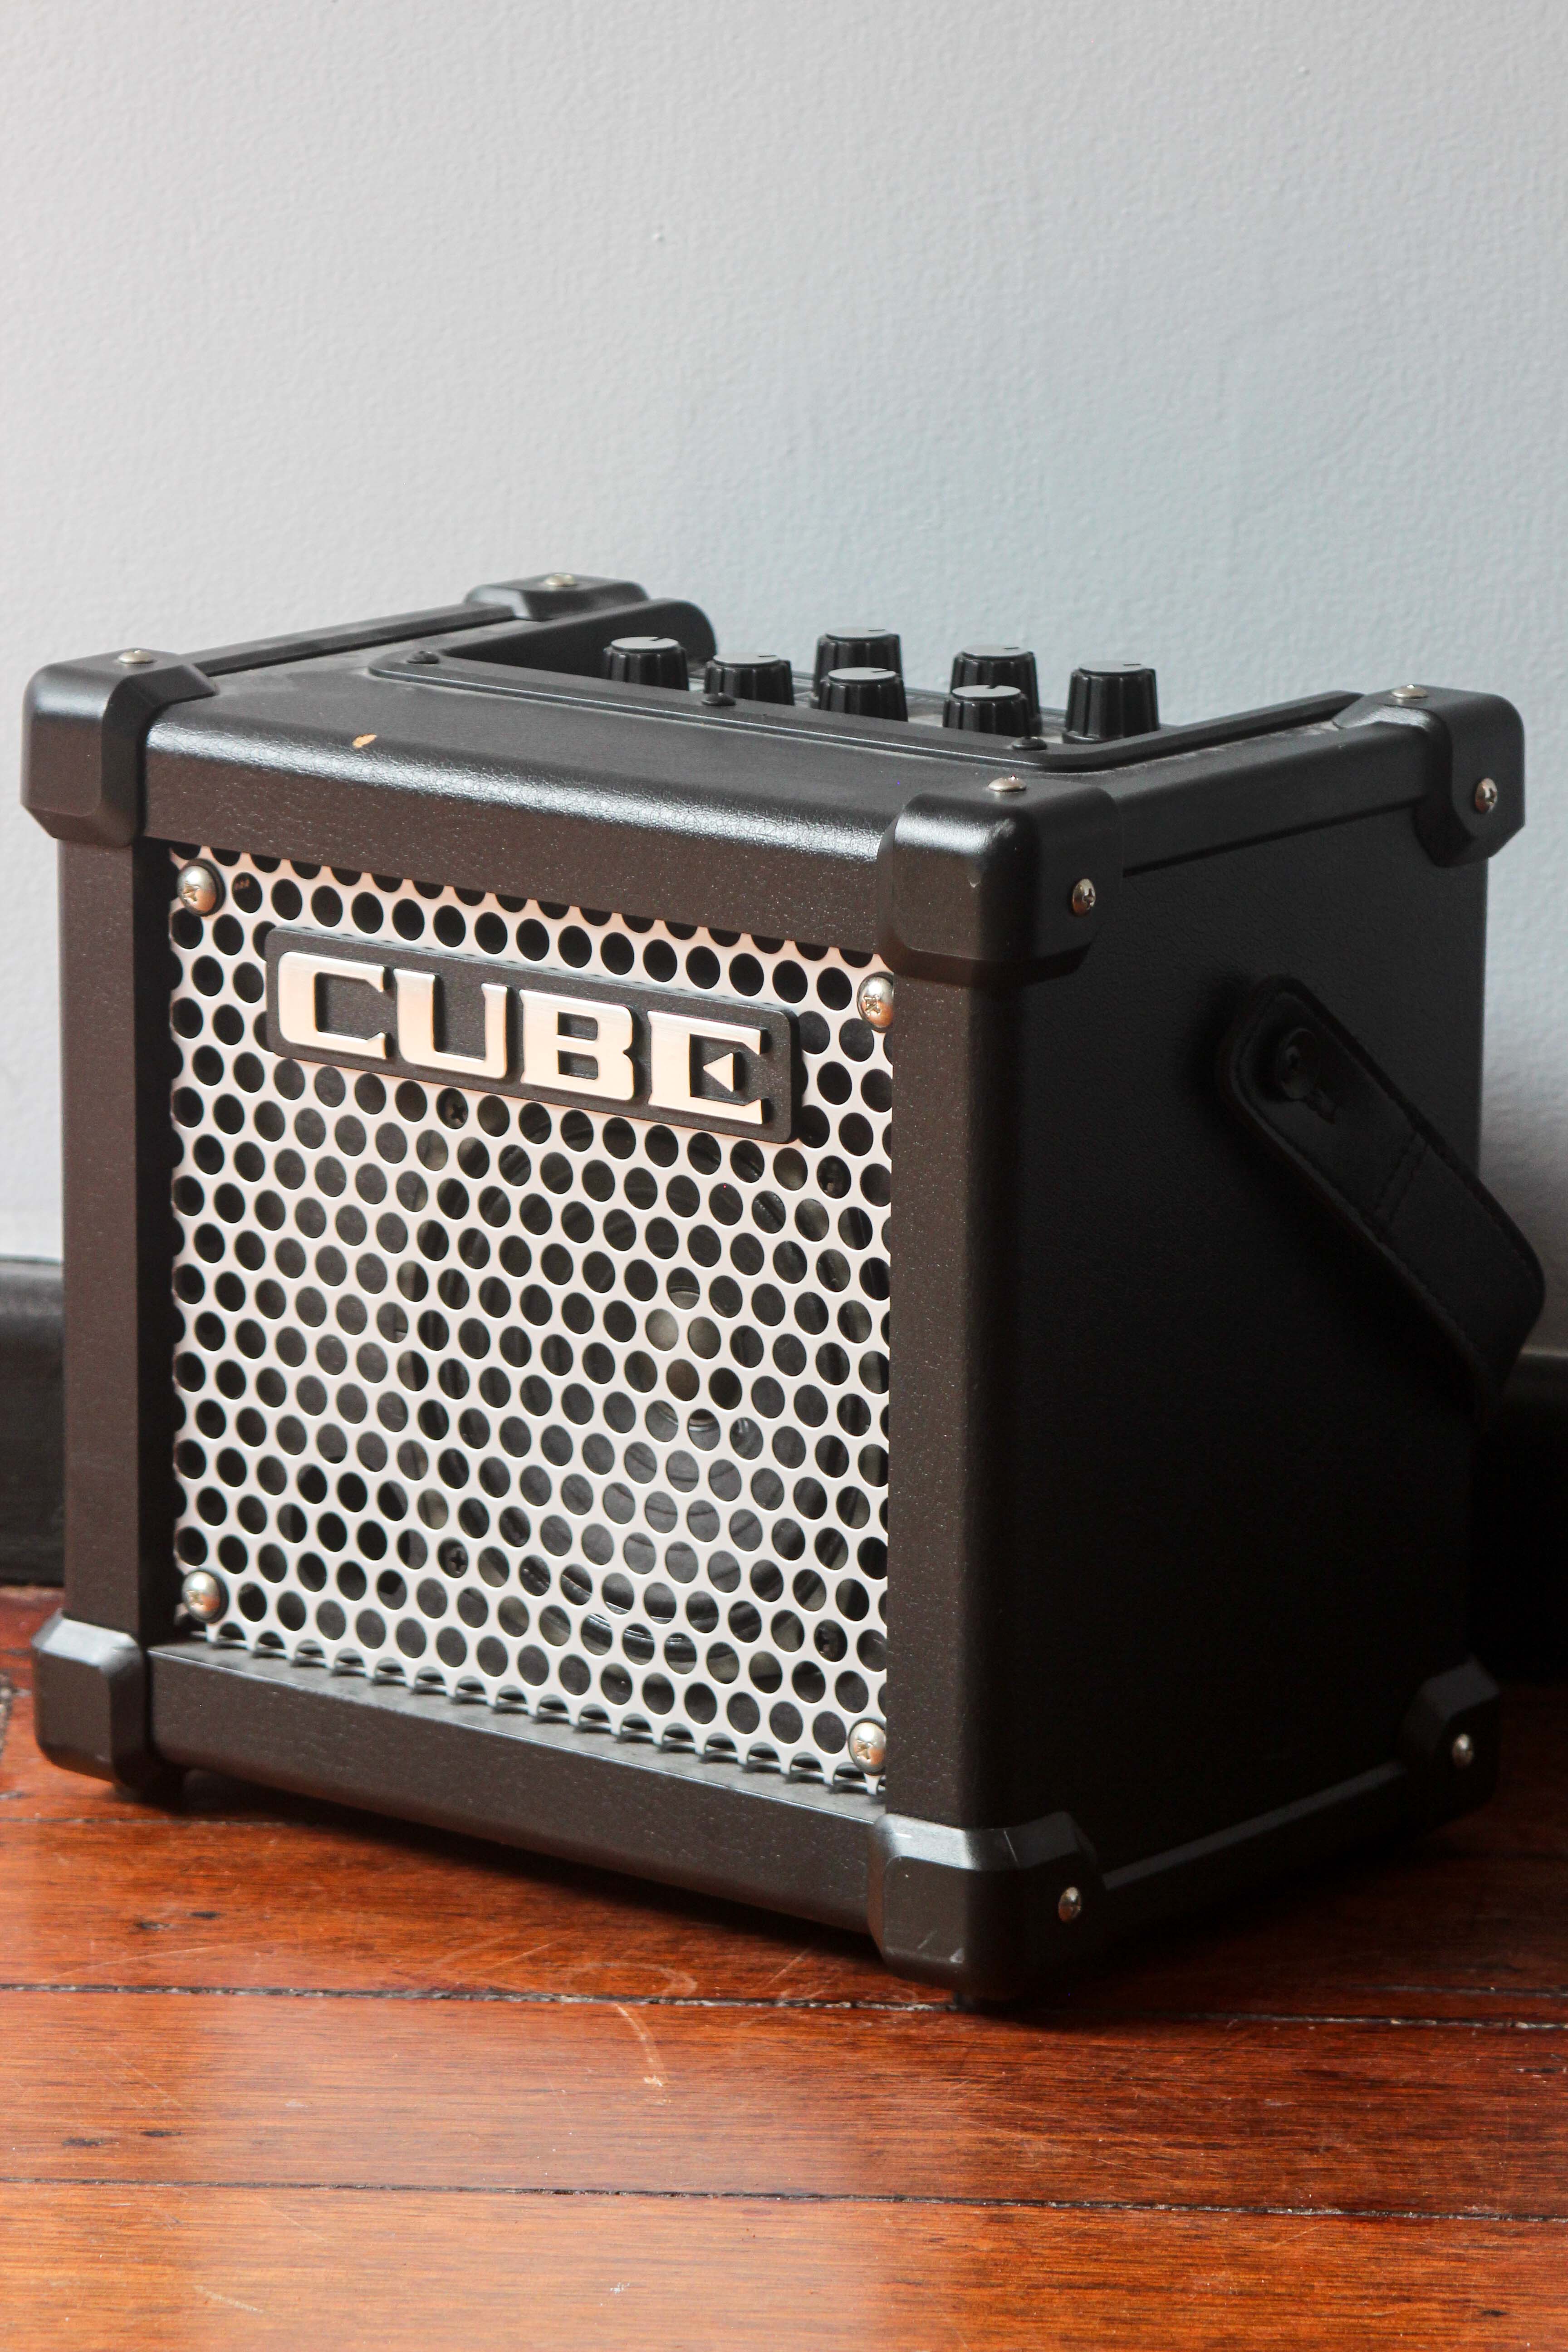 micro cube gx ローランド ギターアンプ 新登場 restocks www